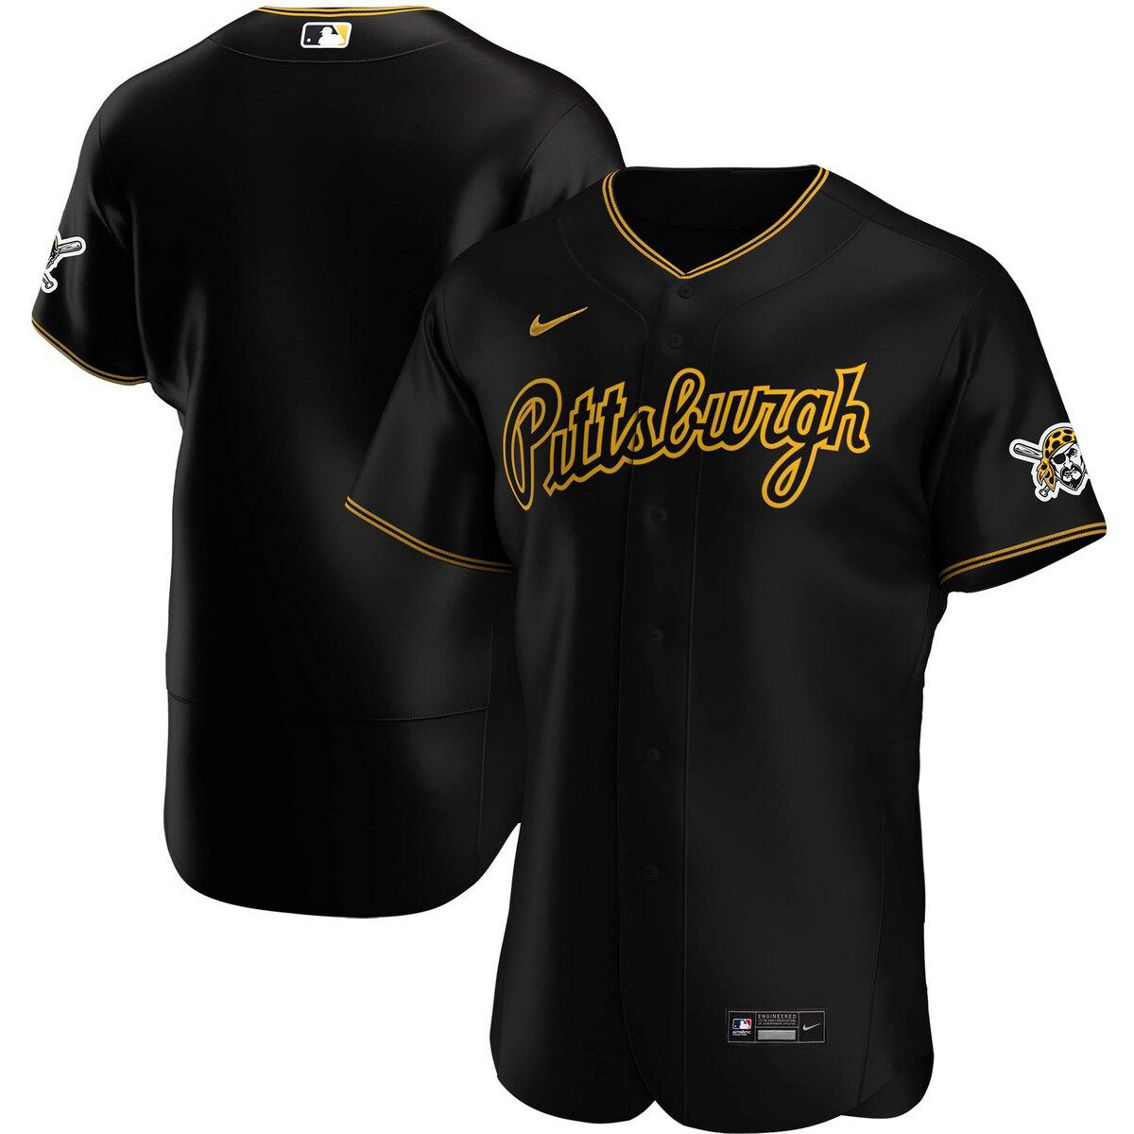 Nike Men's Black Pittsburgh Pirates Alternate Authentic Team Jersey - Image 2 of 4